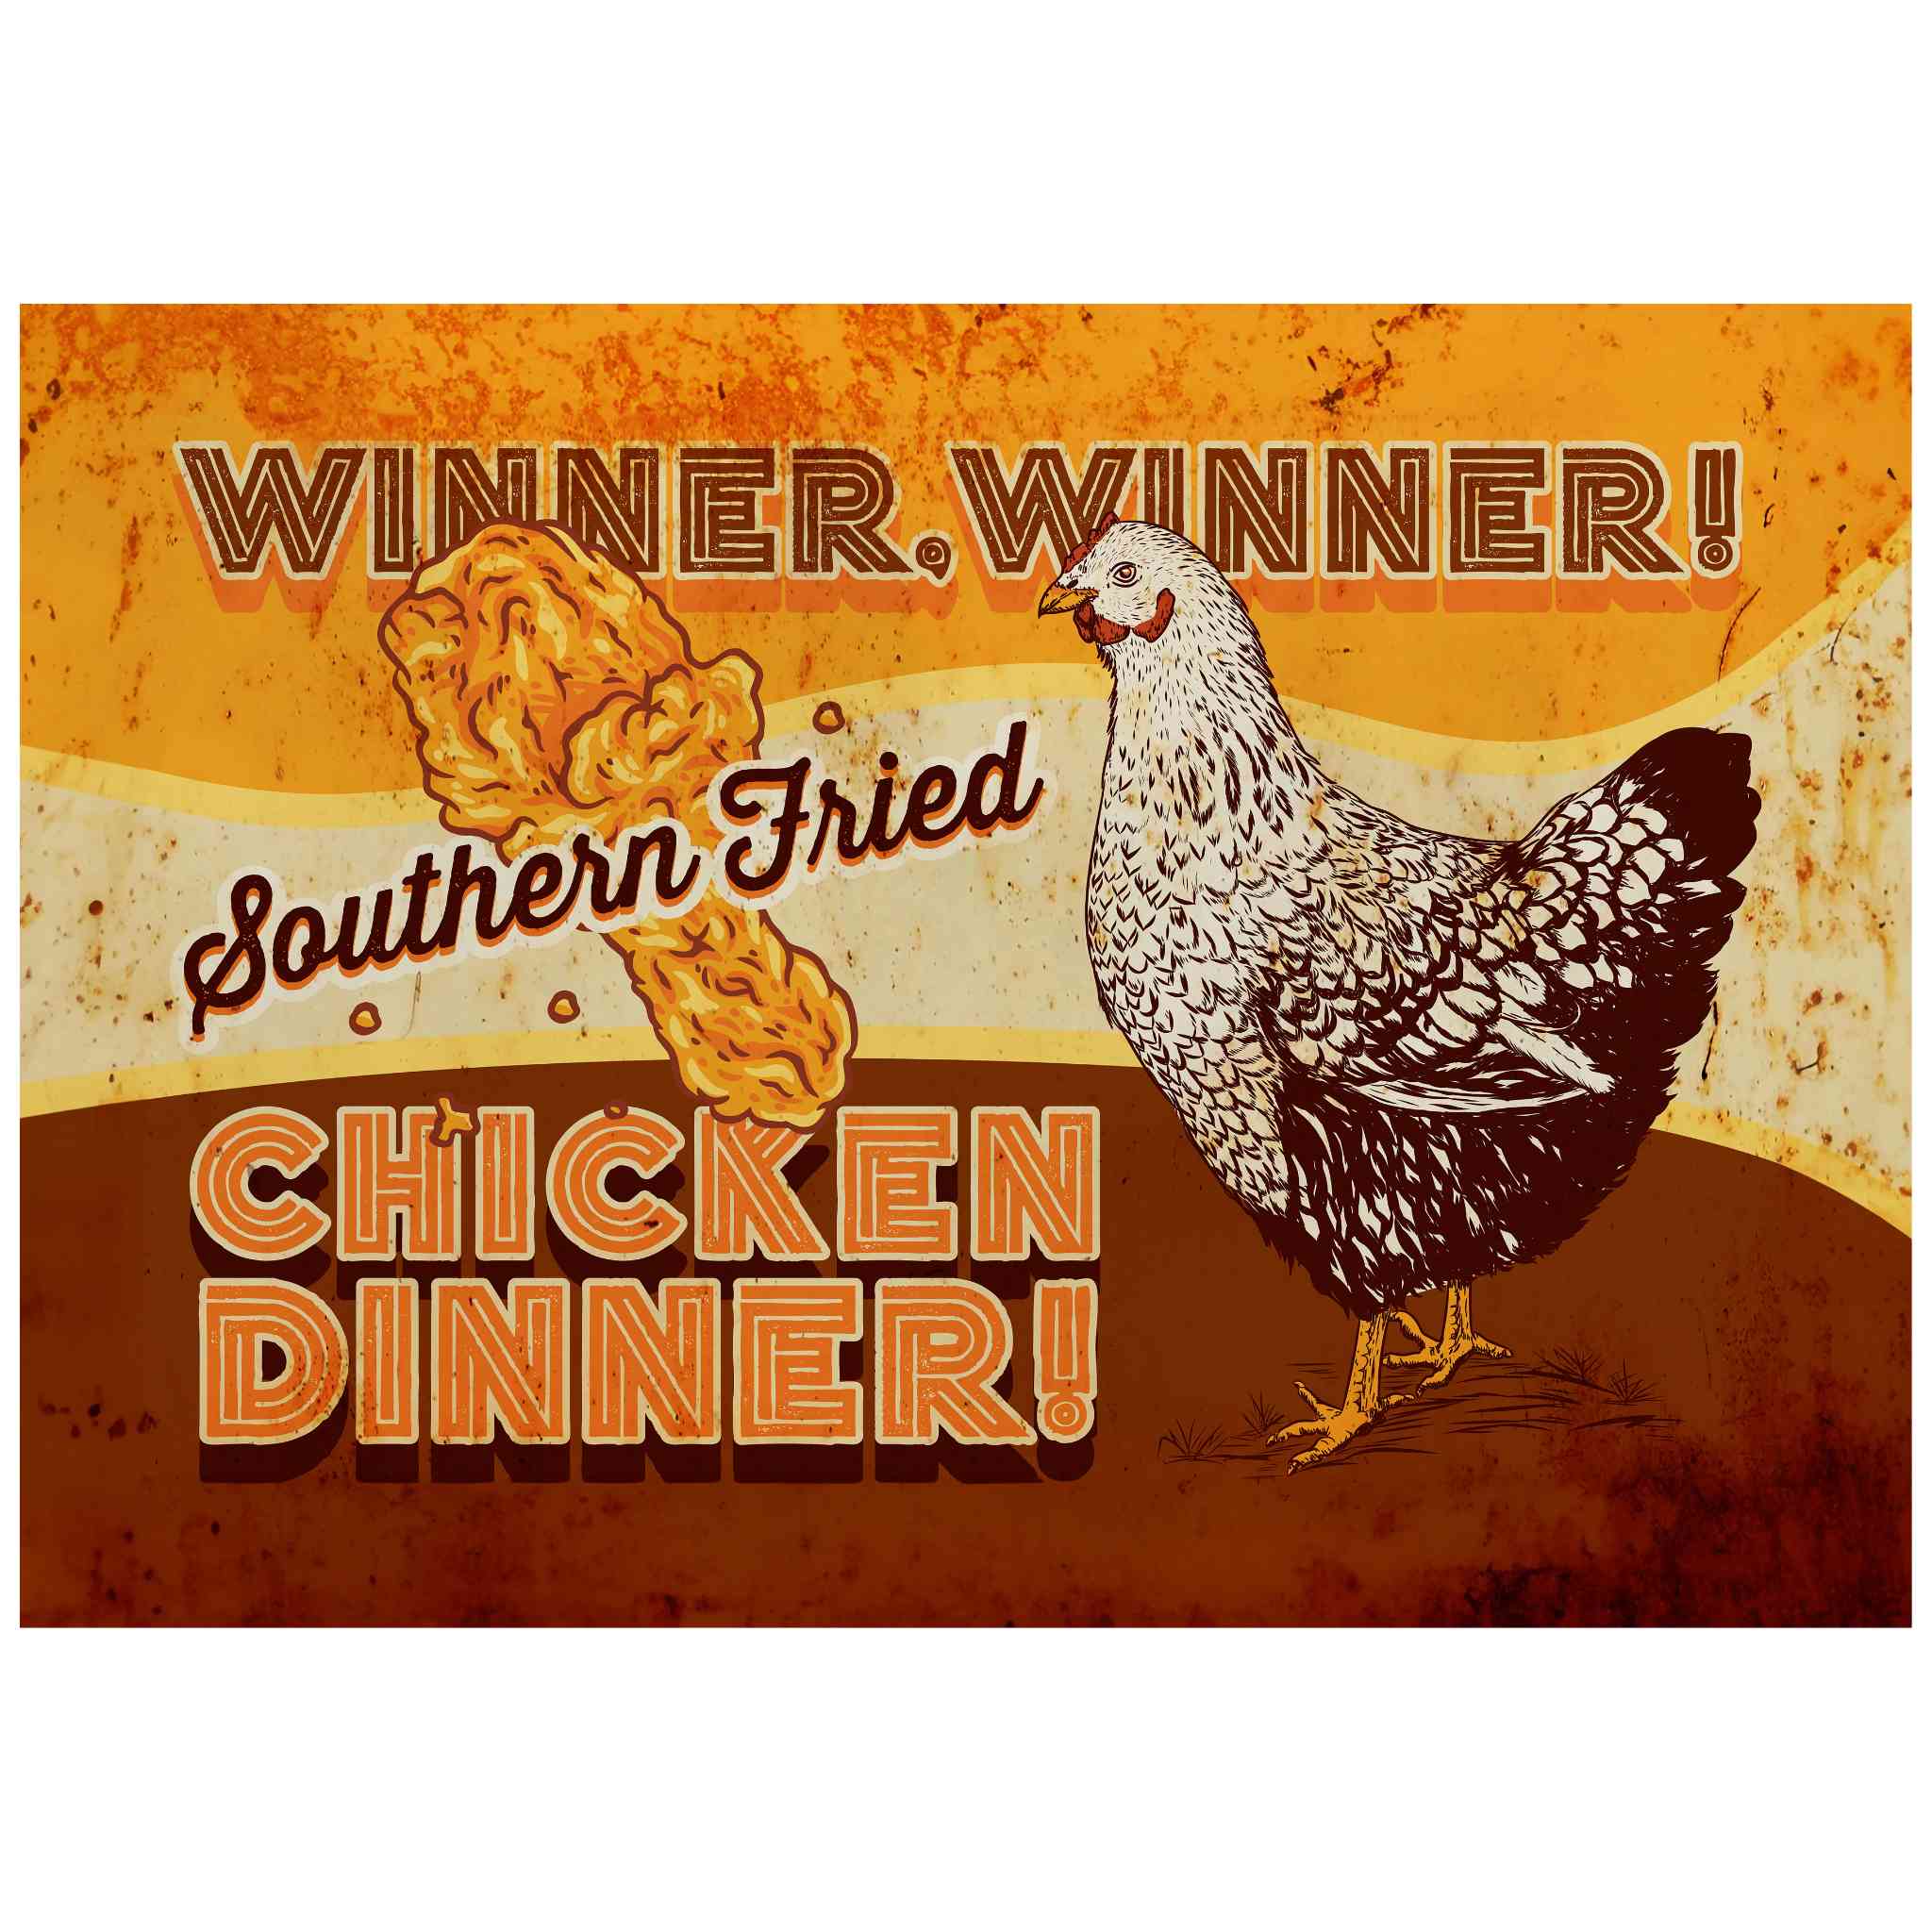 Farmhouse Kitchen Wall Decor - Winner Winner Chicken Dinner - Canvas Sign